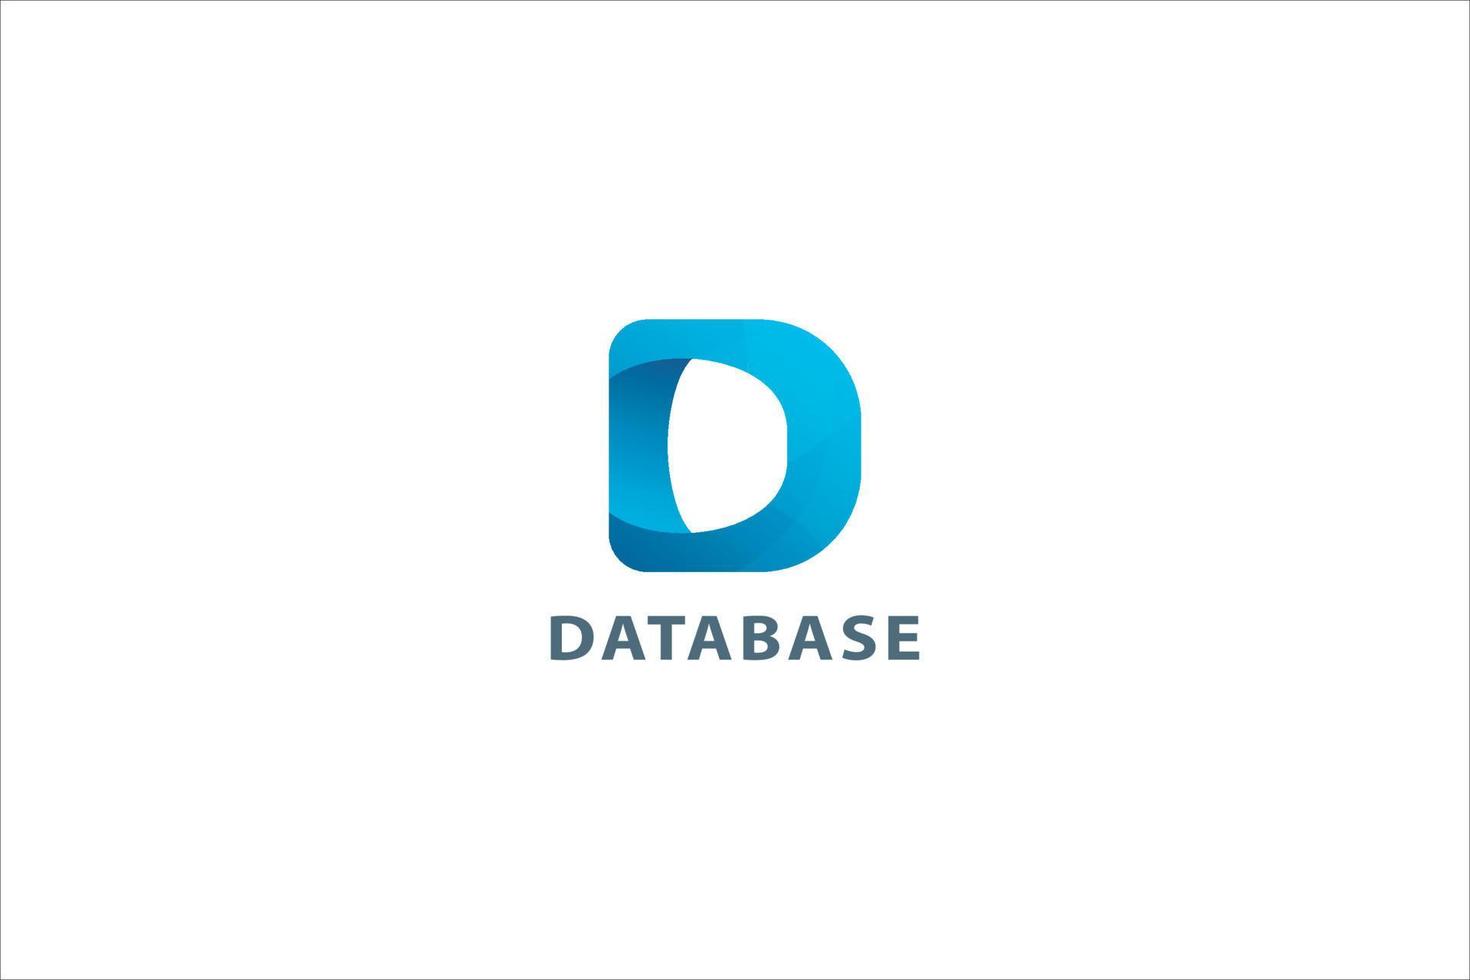 Letter D blue color 3d creative modern database logo vector